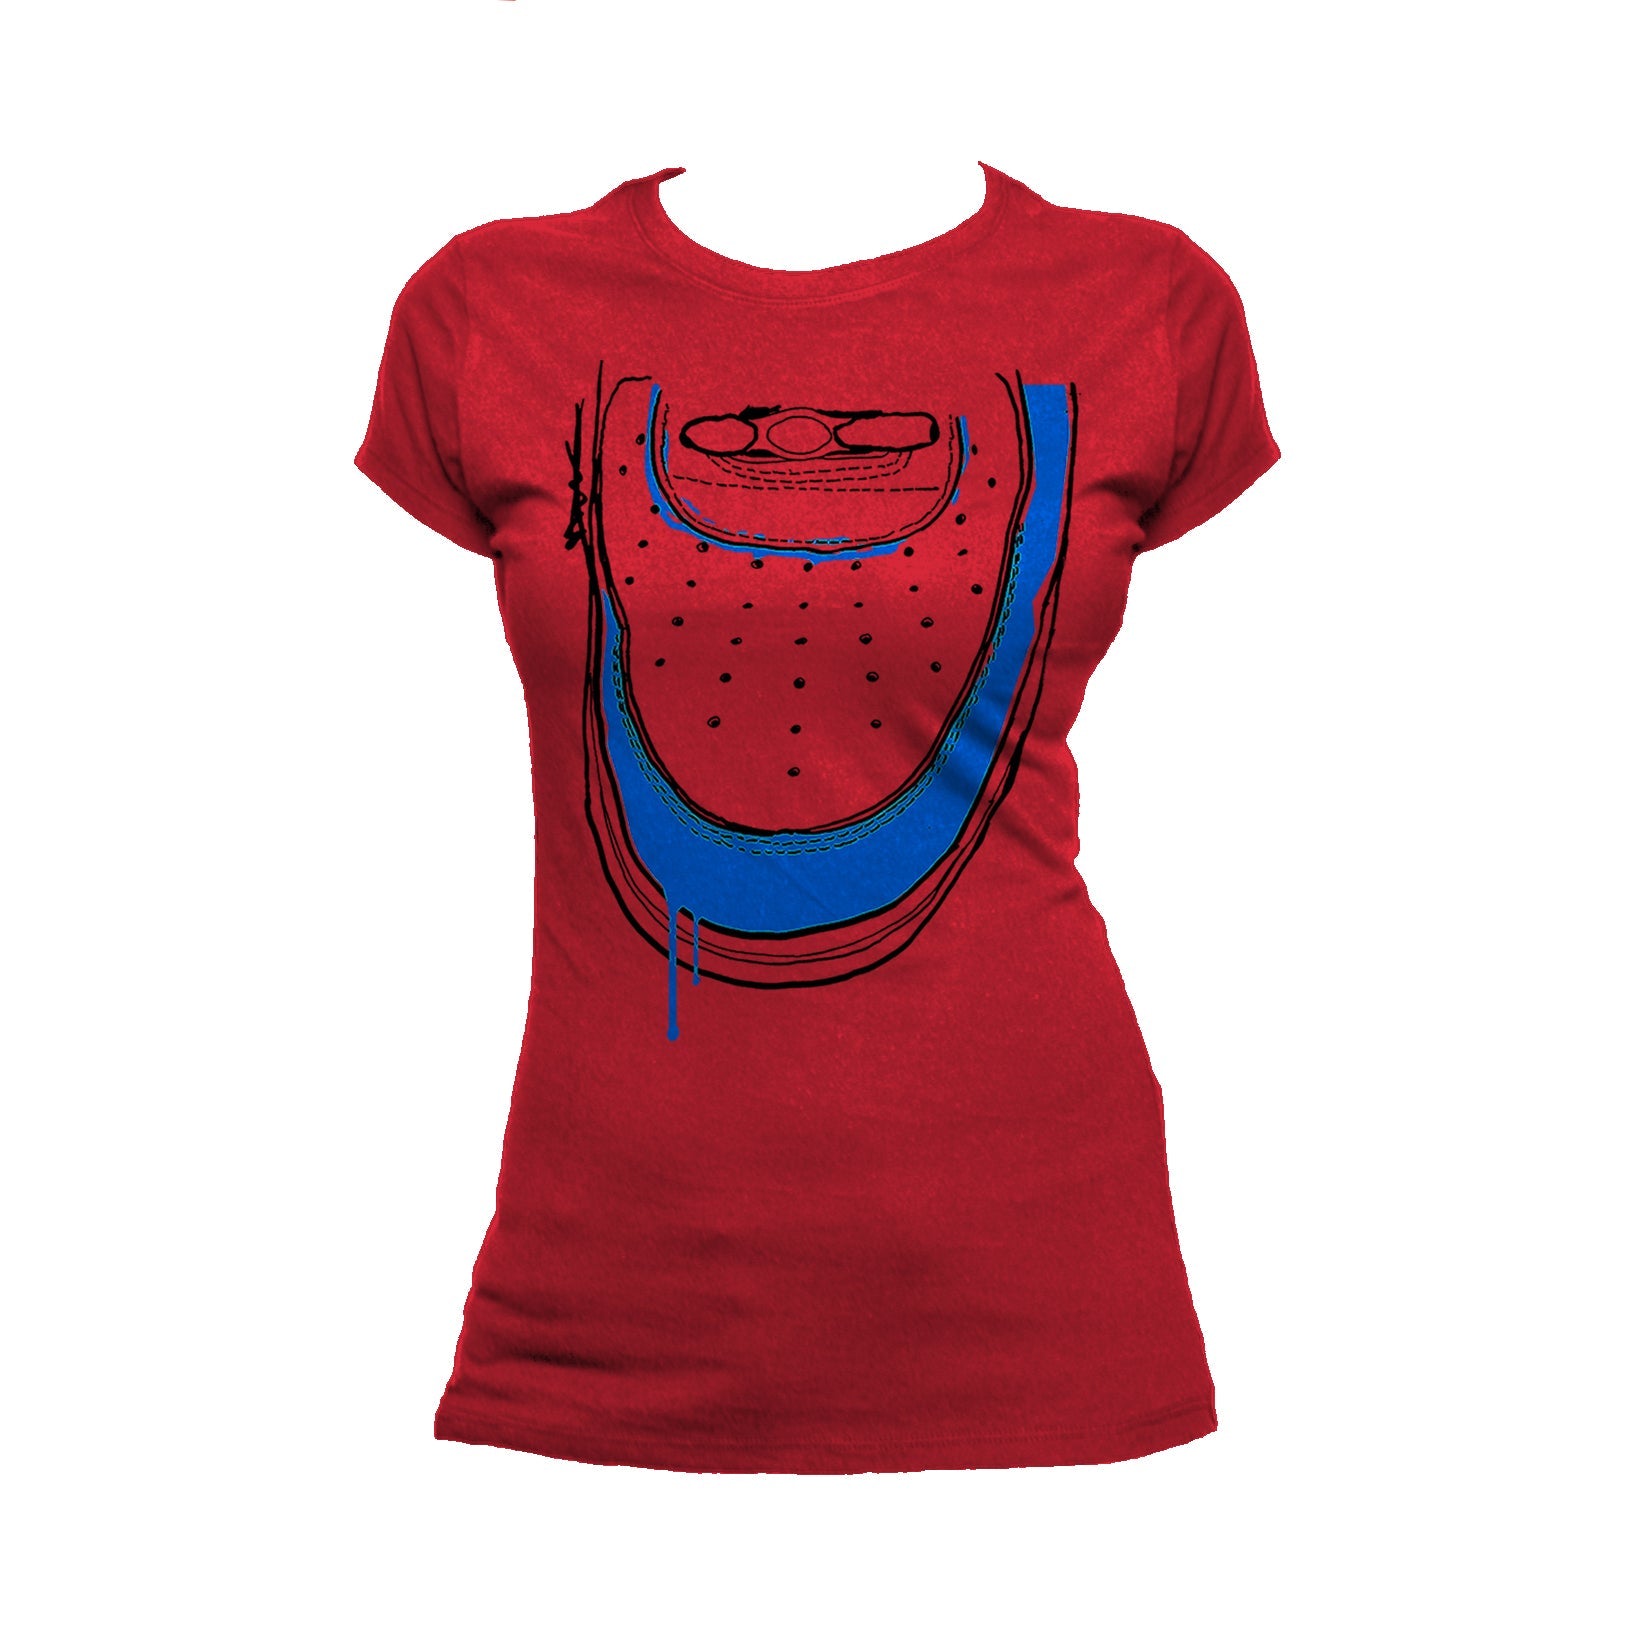 US Brand X Old's Kool Sneak Official Women's T-Shirt ()